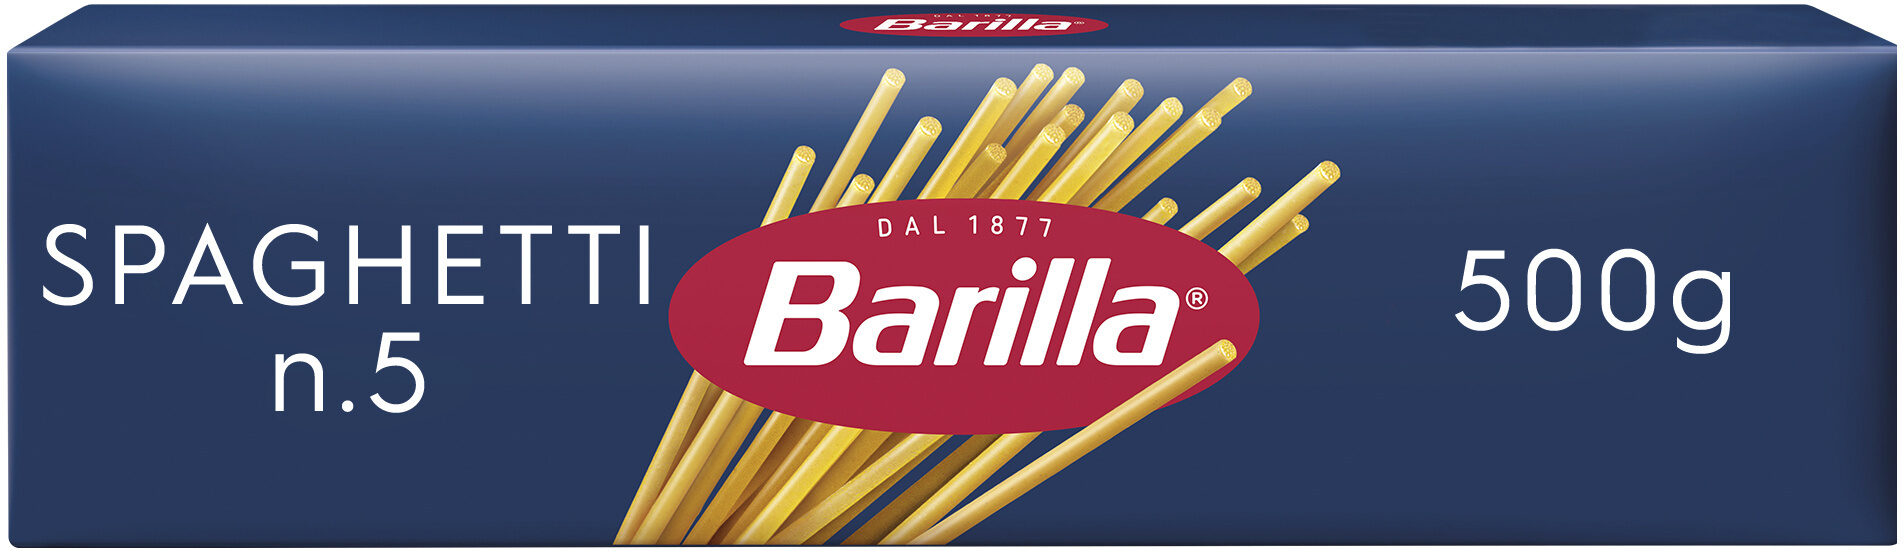 Barilla pates spaghetti n°5 500g - 产品 - fr